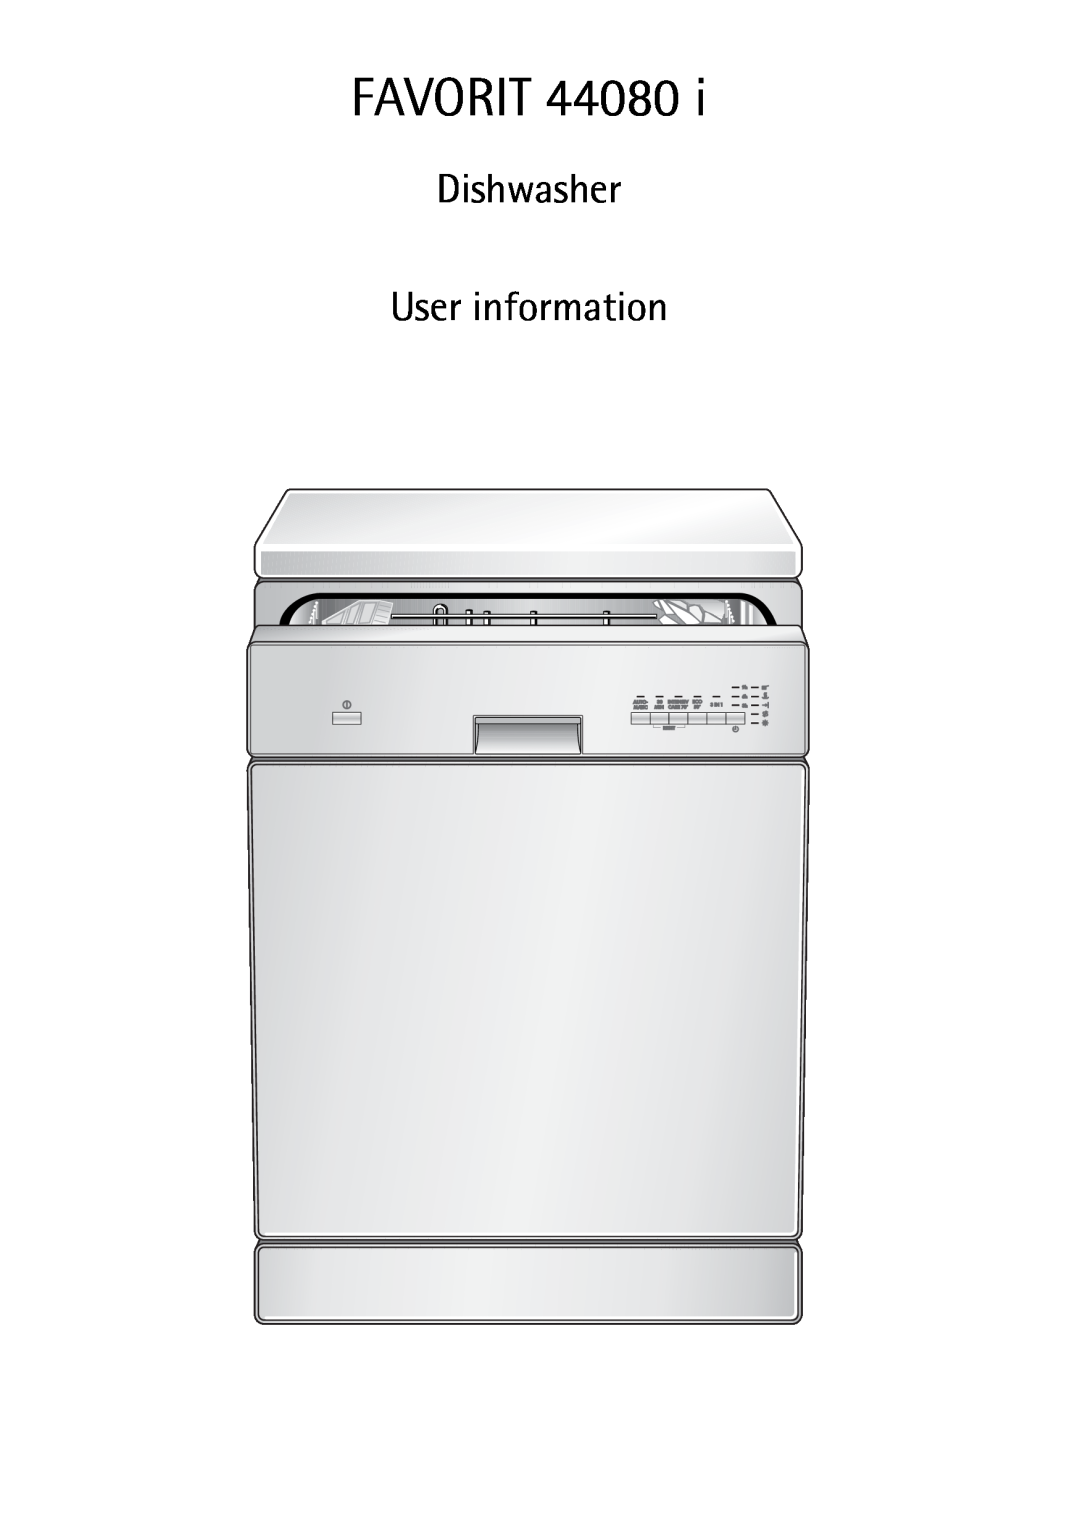 AEG 44080 I manual Favorit, Dishwasher User information 